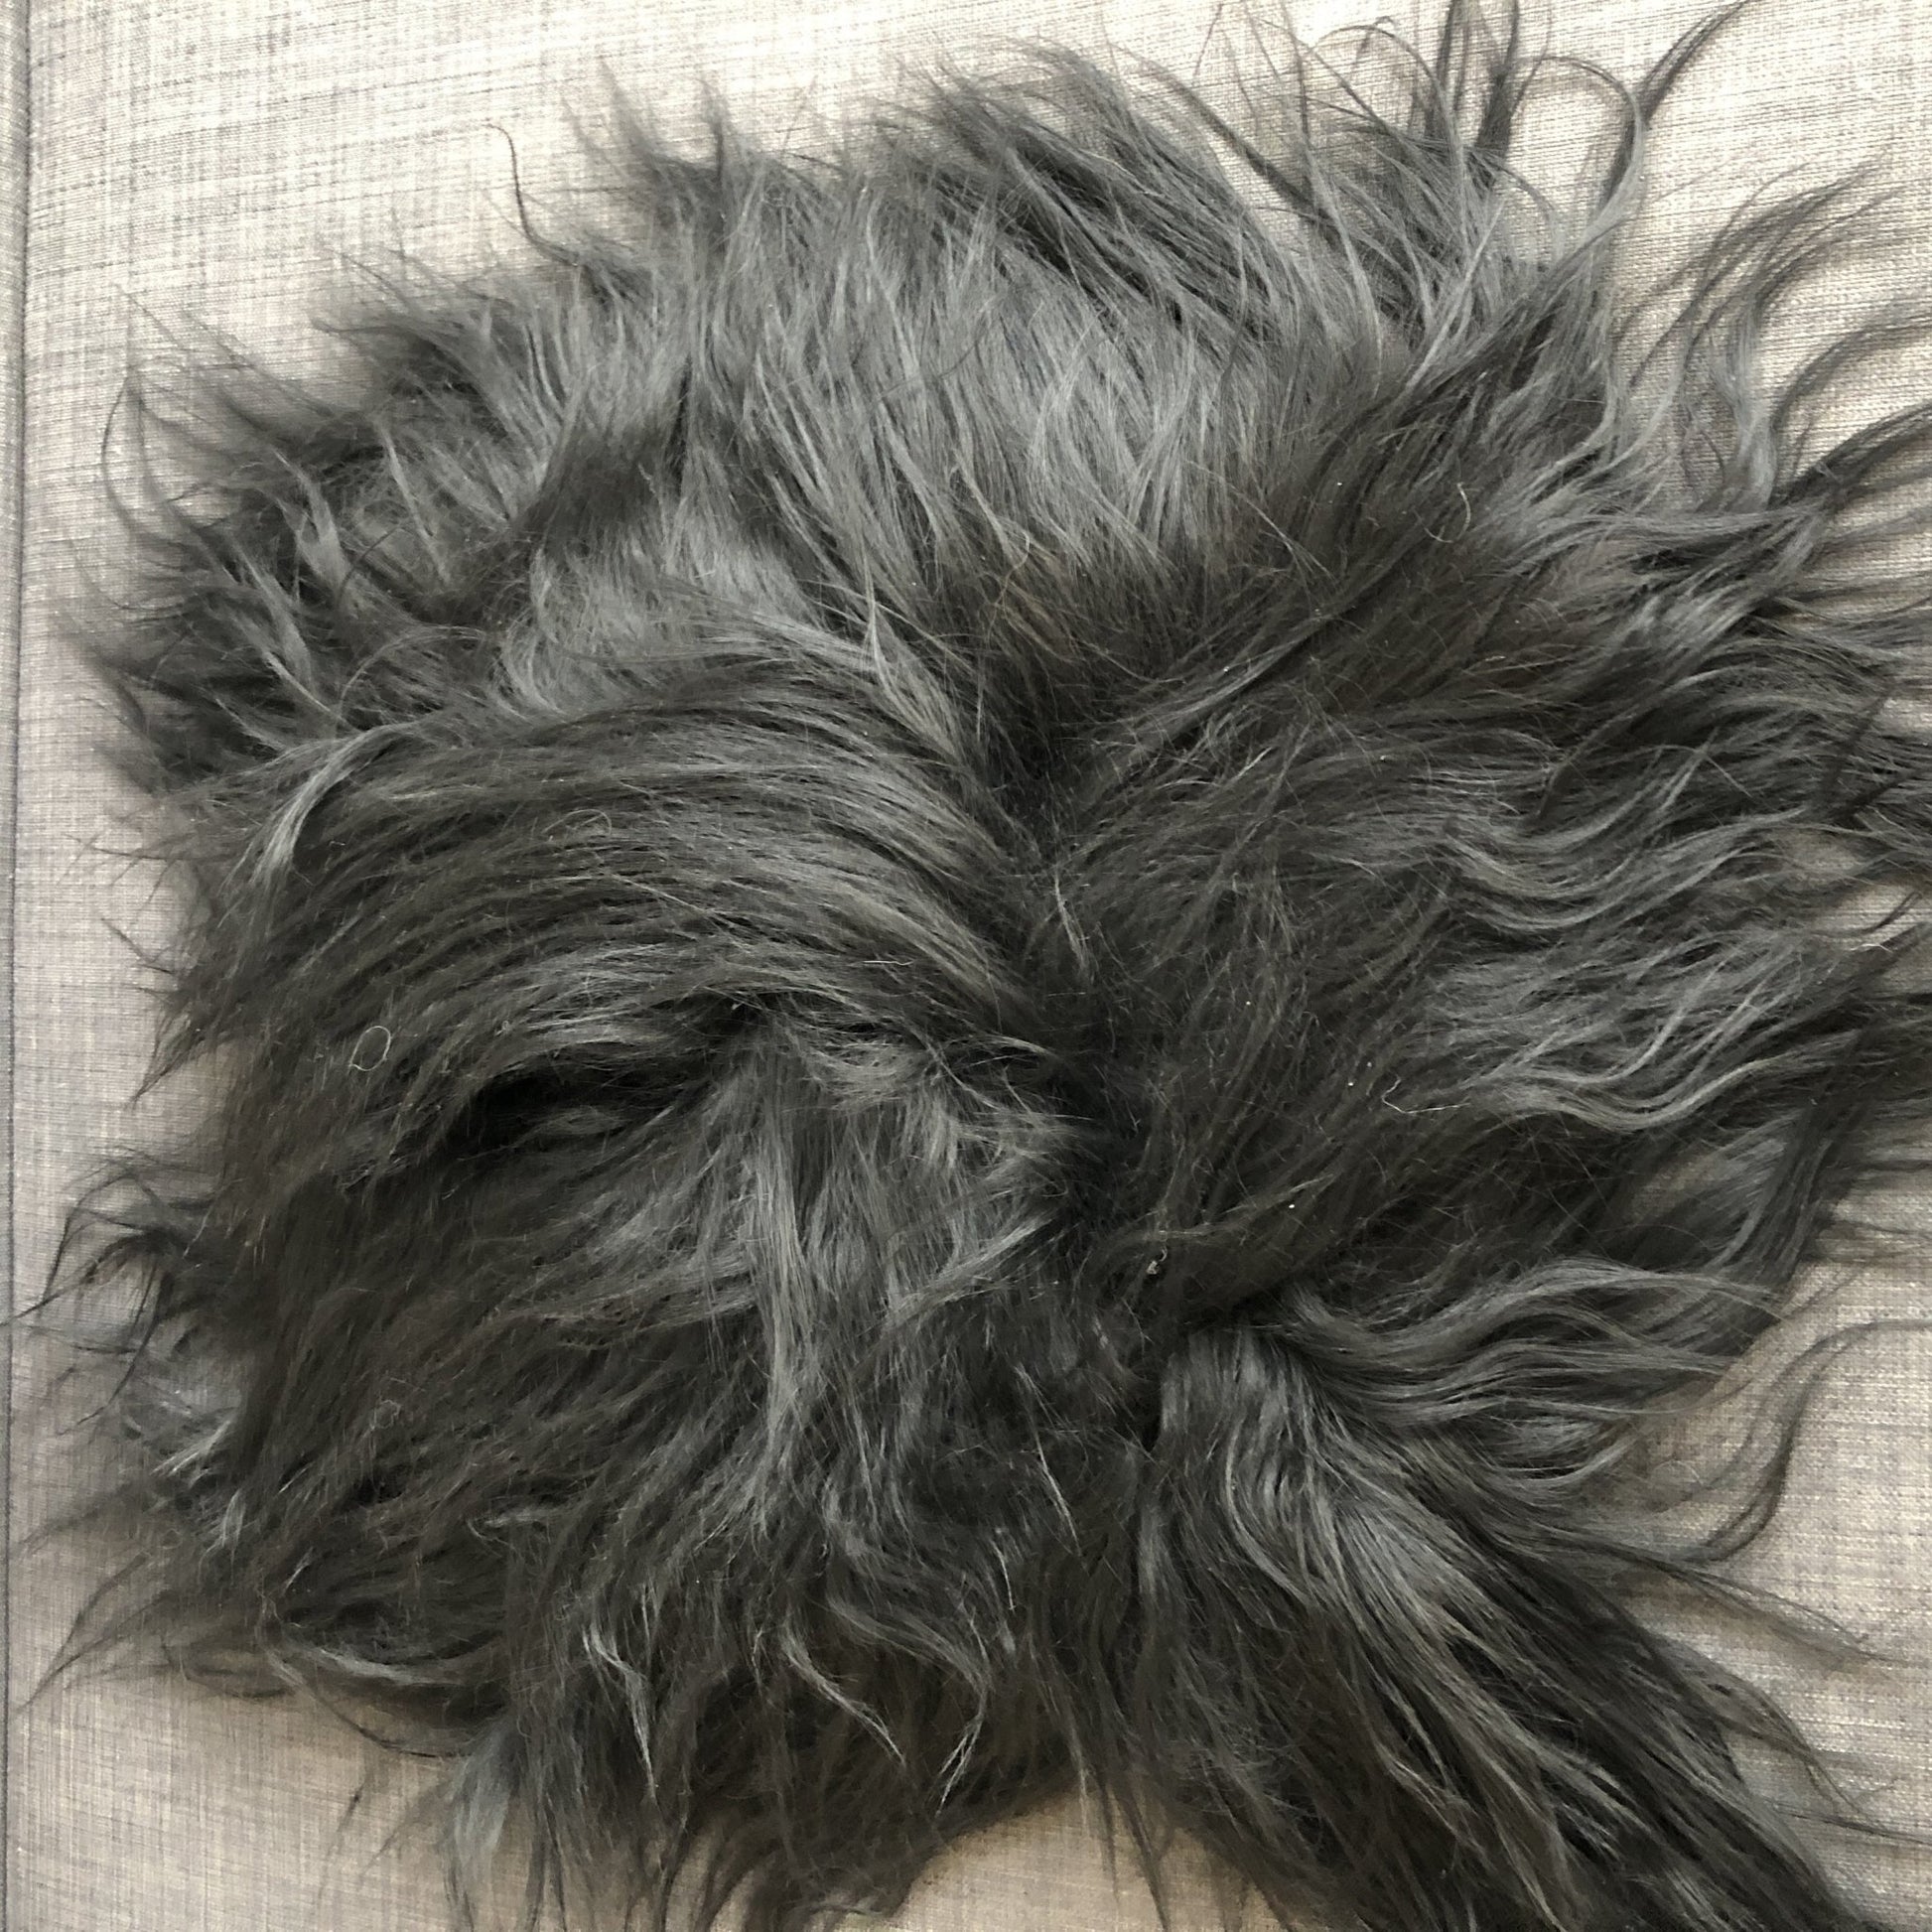 Icelandic Sheepskin Square Seat Cover 37cm Long Fur Natural Black - Wildash London